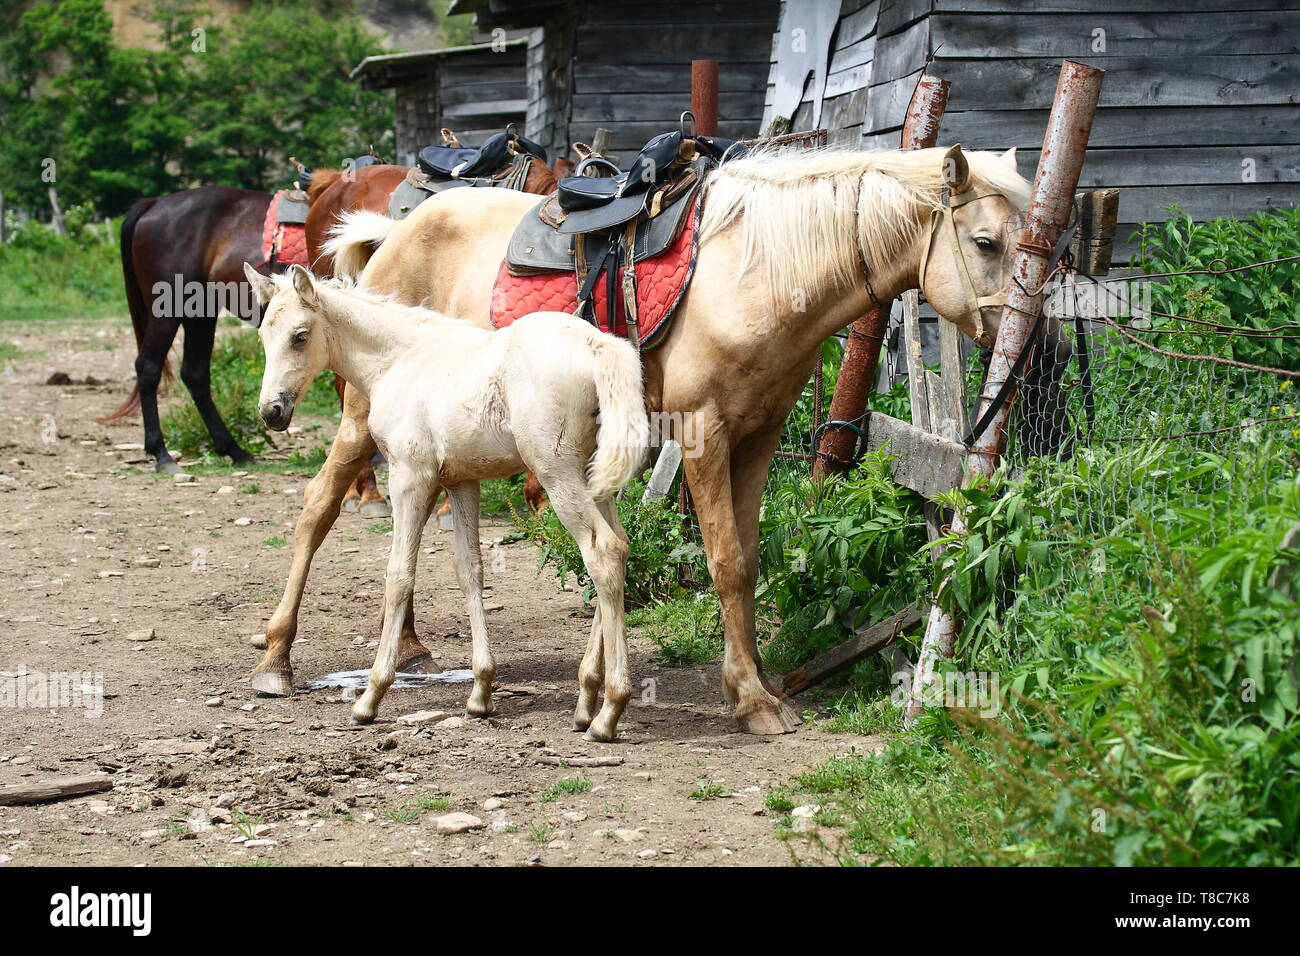 Three horses on a farm, saddled for riding Stock Photo